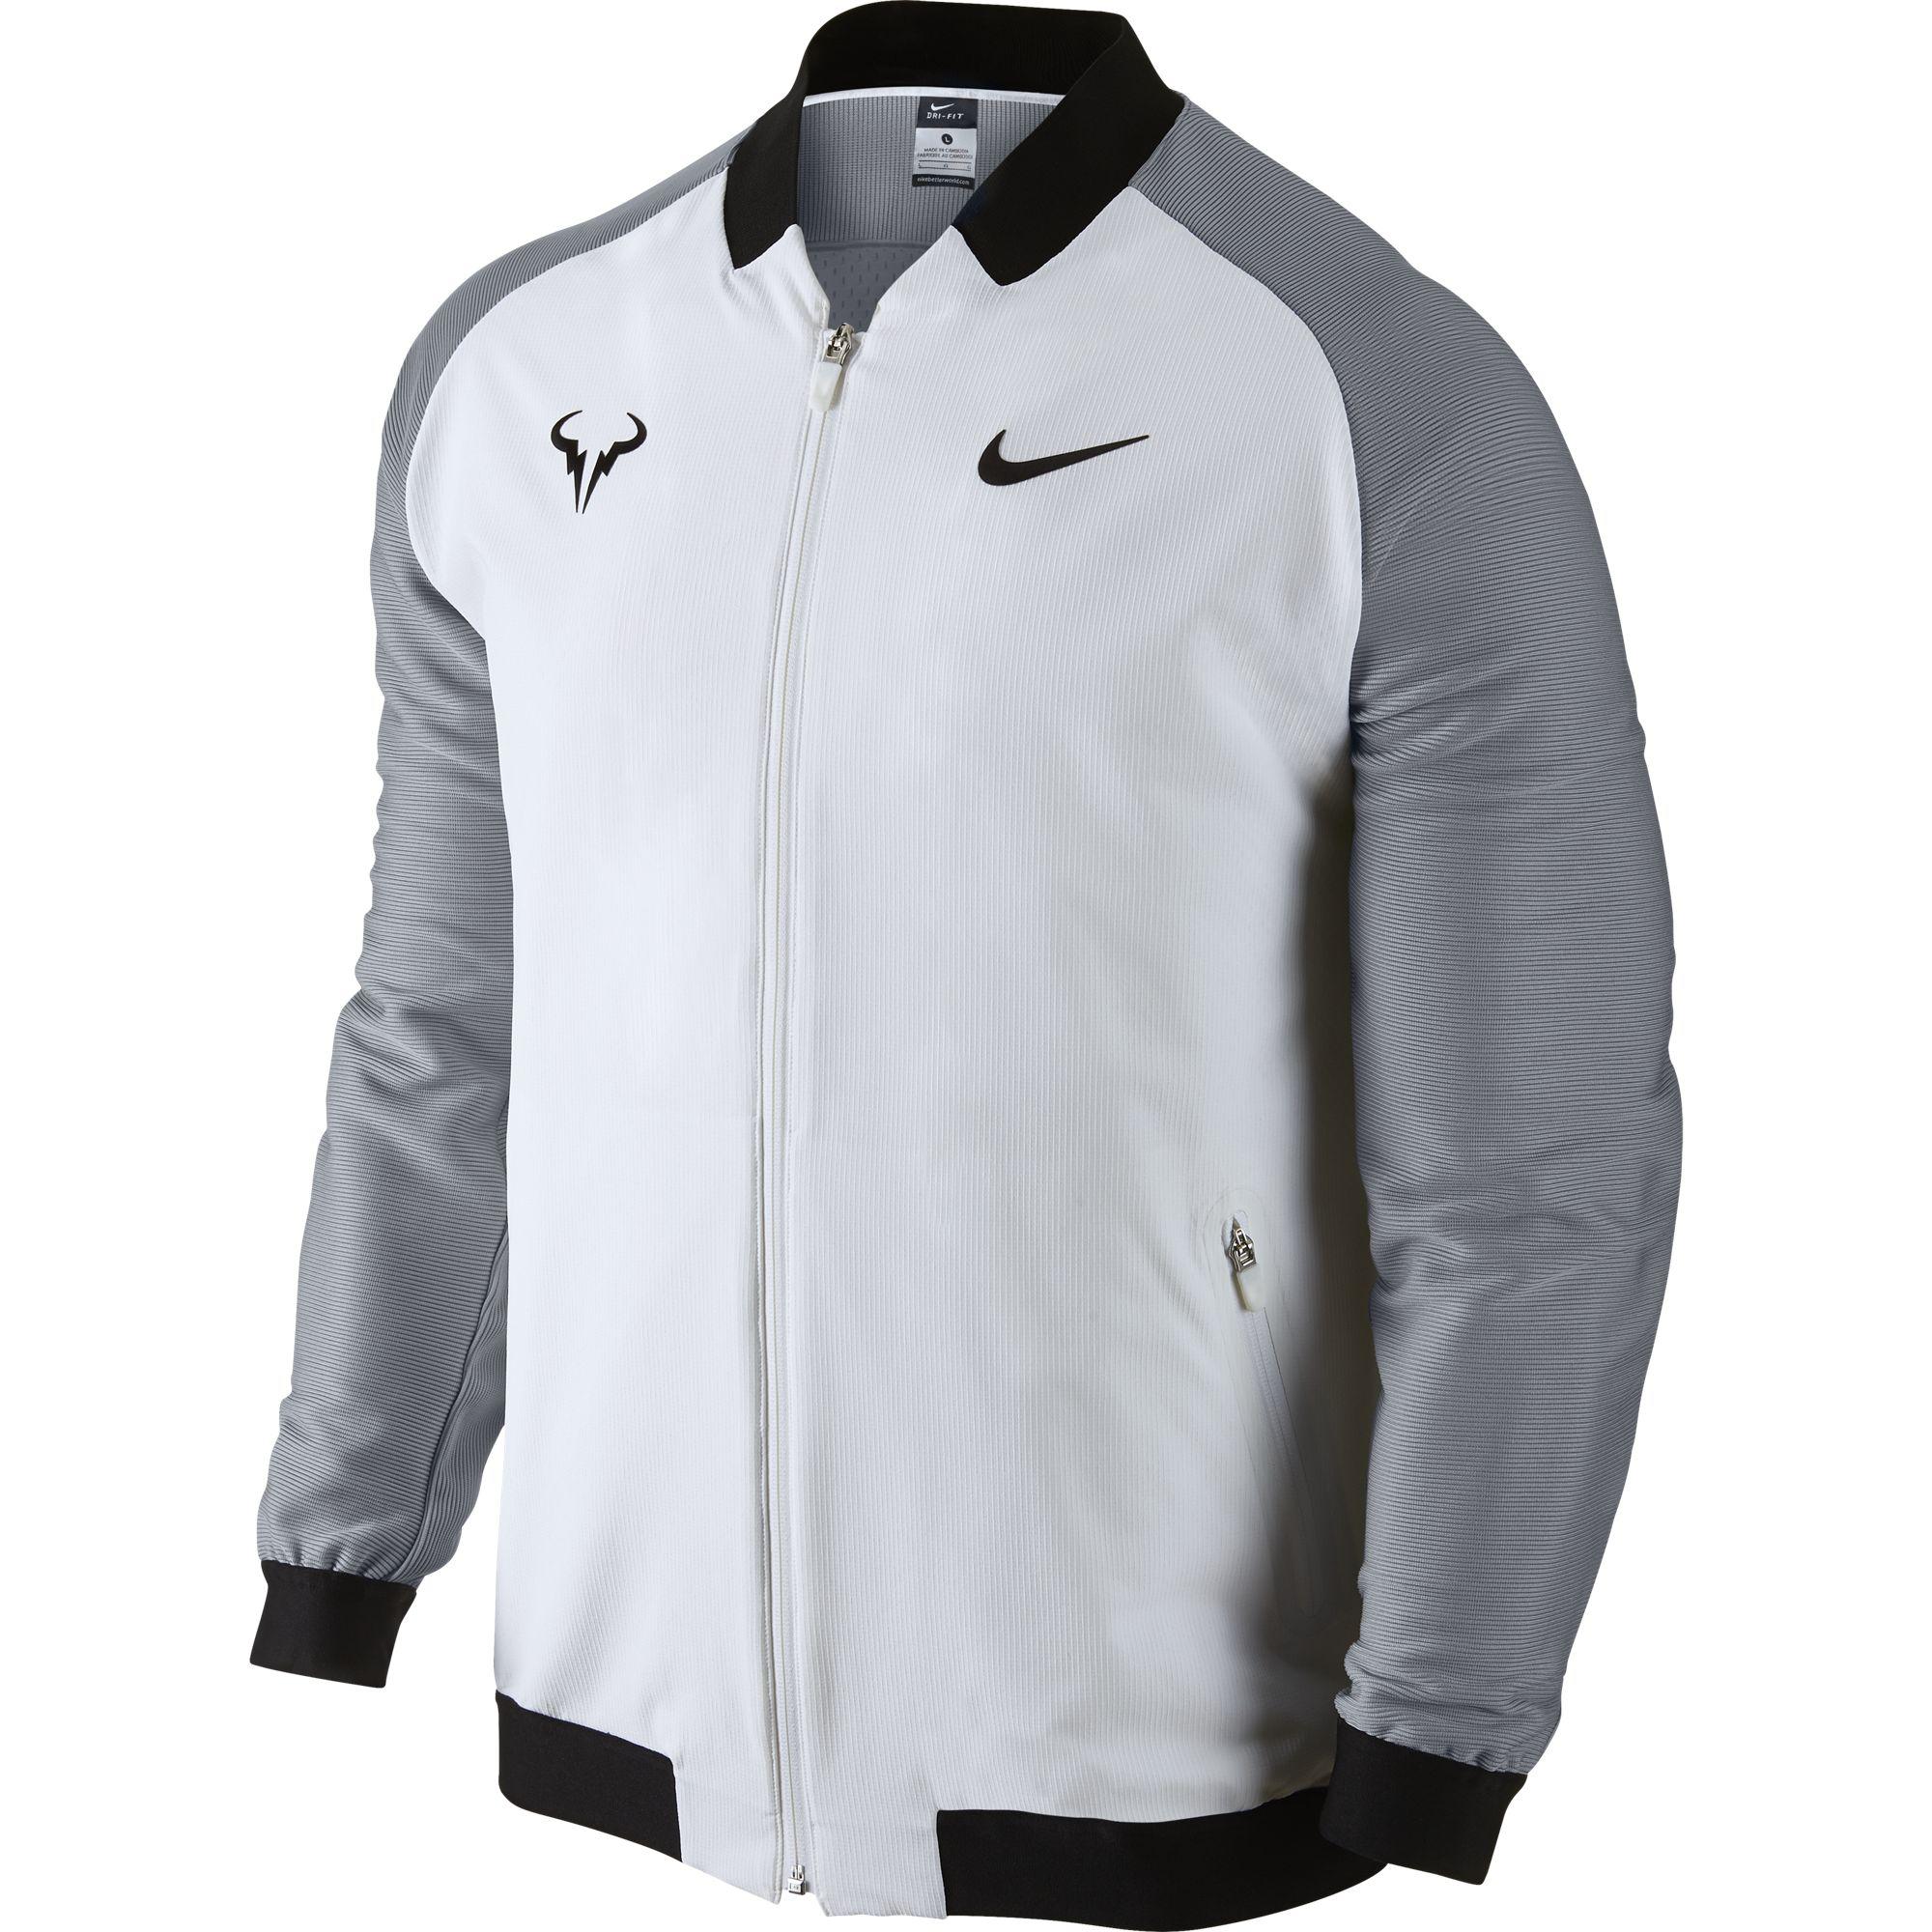 Nike Mens Premier Rafa Jacket - White/Stealth/Black Tennisnuts.com